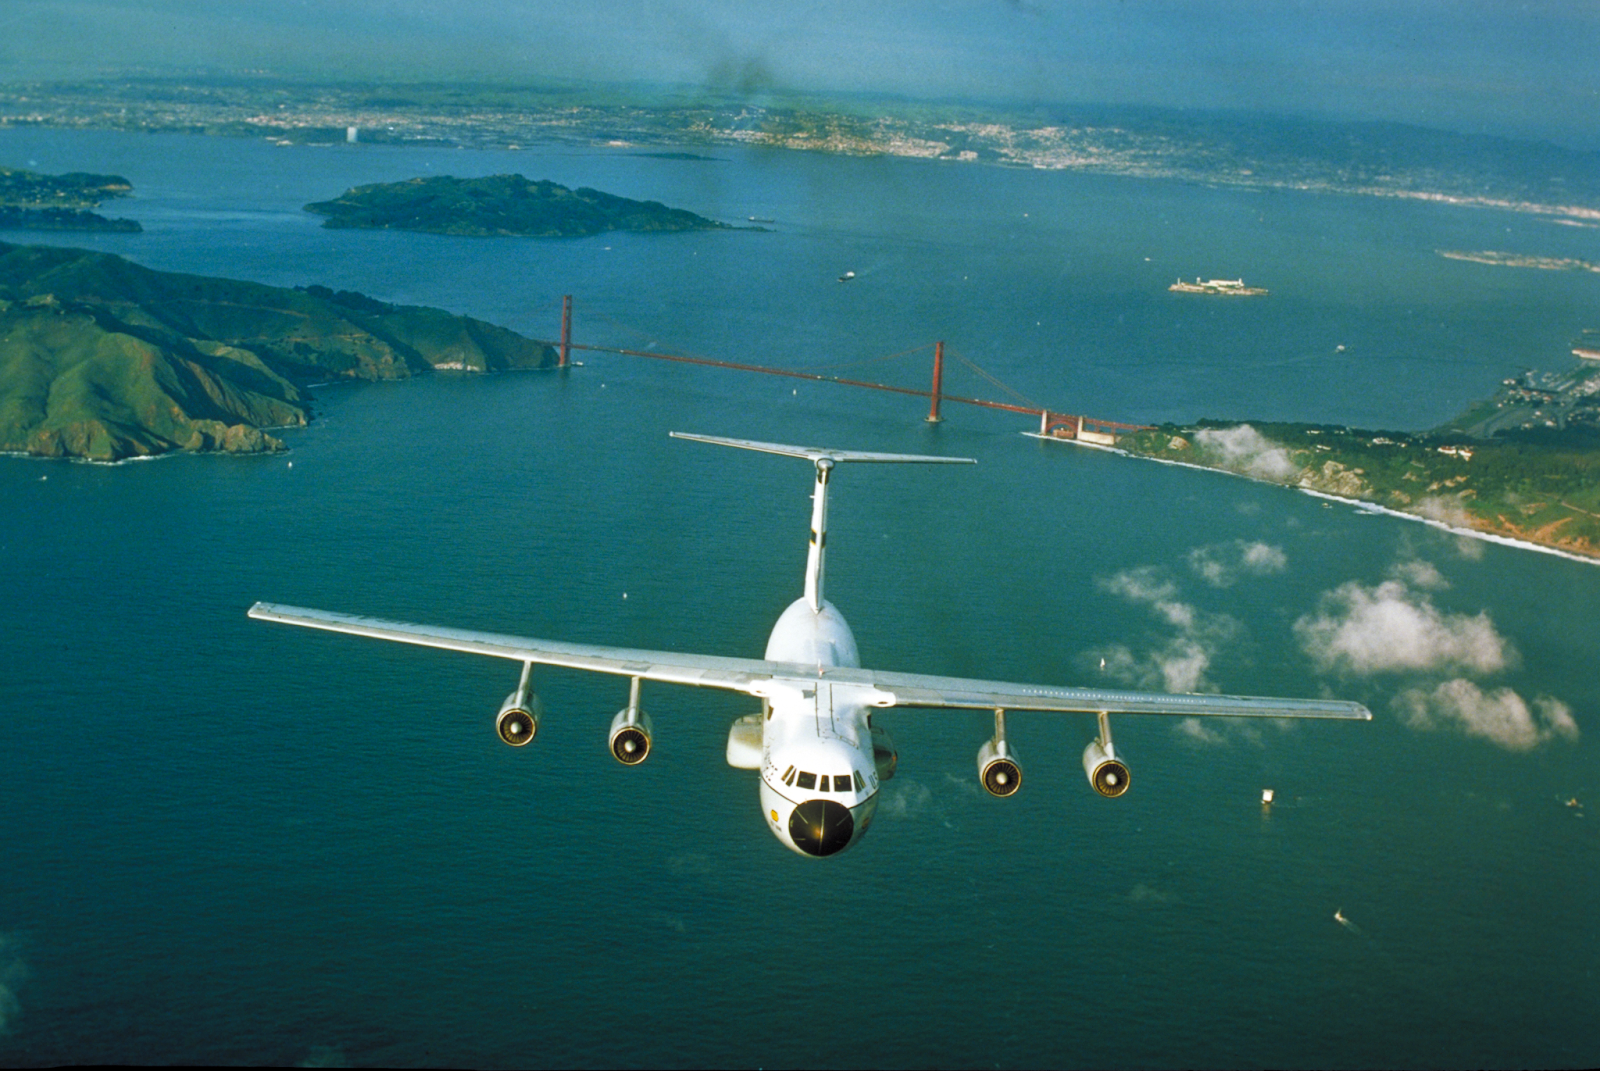 Lockheed’s C-141 aircraft